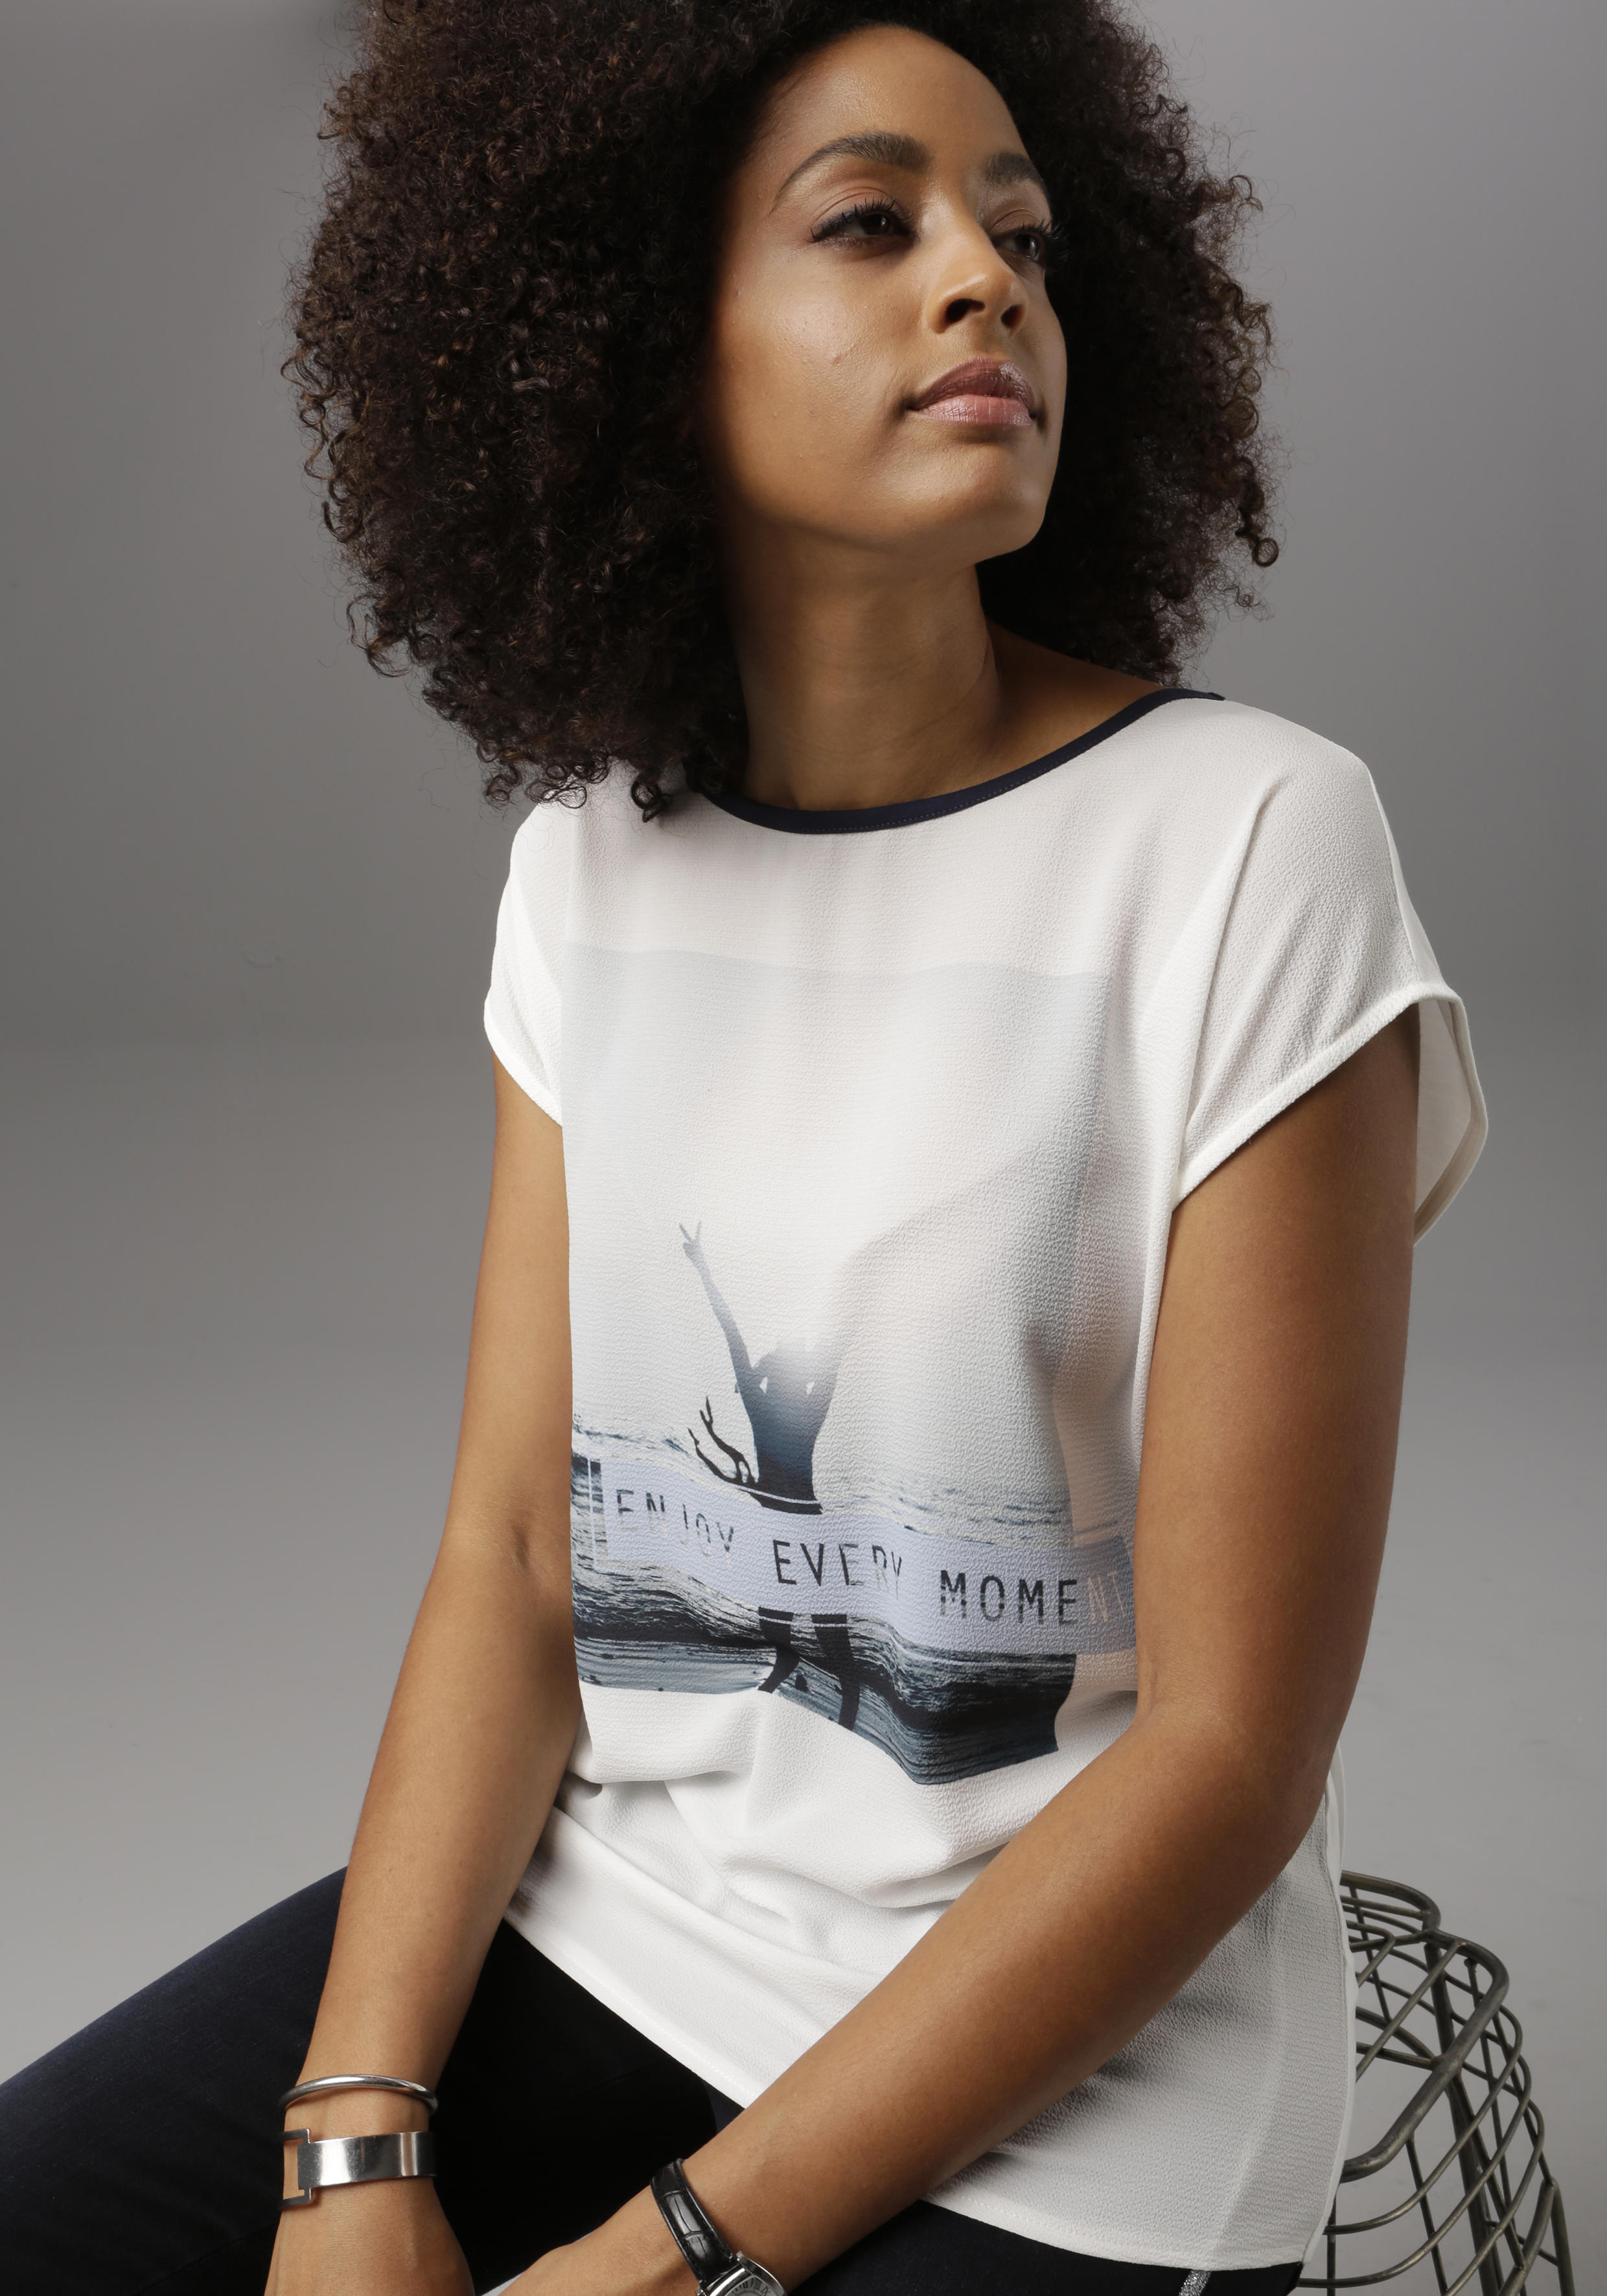 Ärmellose jetzt Modetrends Shirts bestellen - aktuelle online